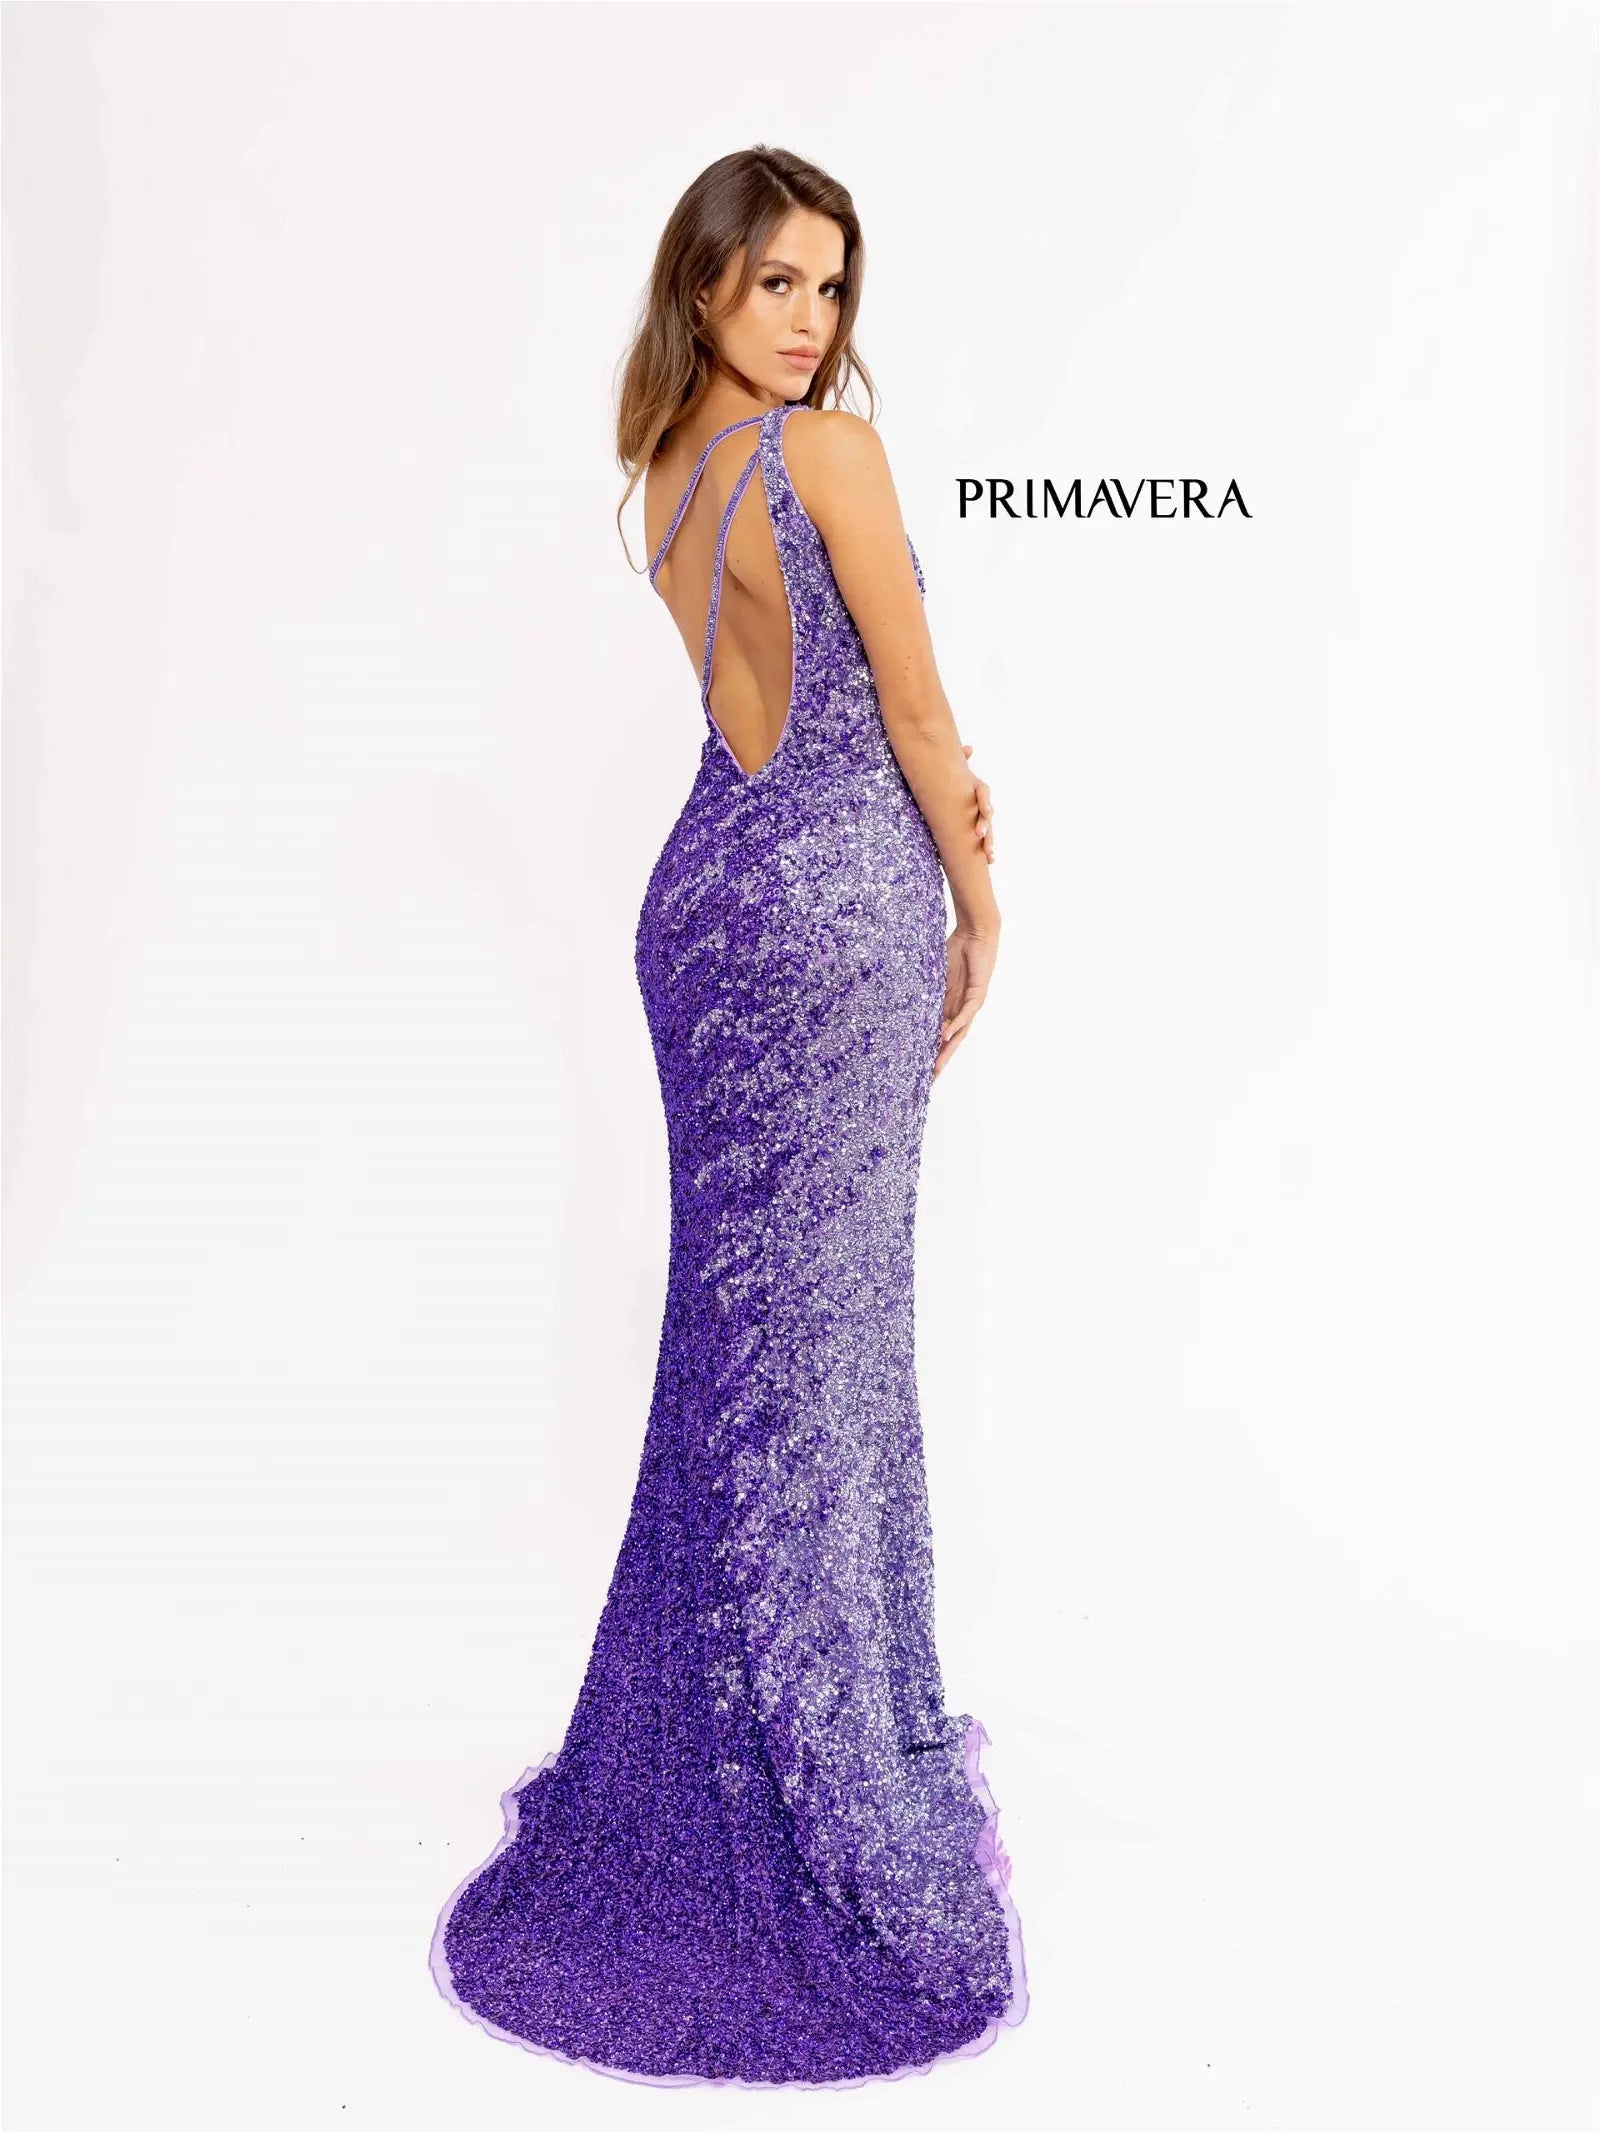 Primavera Couture 3944 Long One Shoulder Sequin Ombre Prom Dress Slit Pageant Gown  Sizes: 000,00,2,4,6,8,10,12,14,16,18,20,22,24  Colors:  LAVENDER, ROYAL BLUE, PINK, BLACK